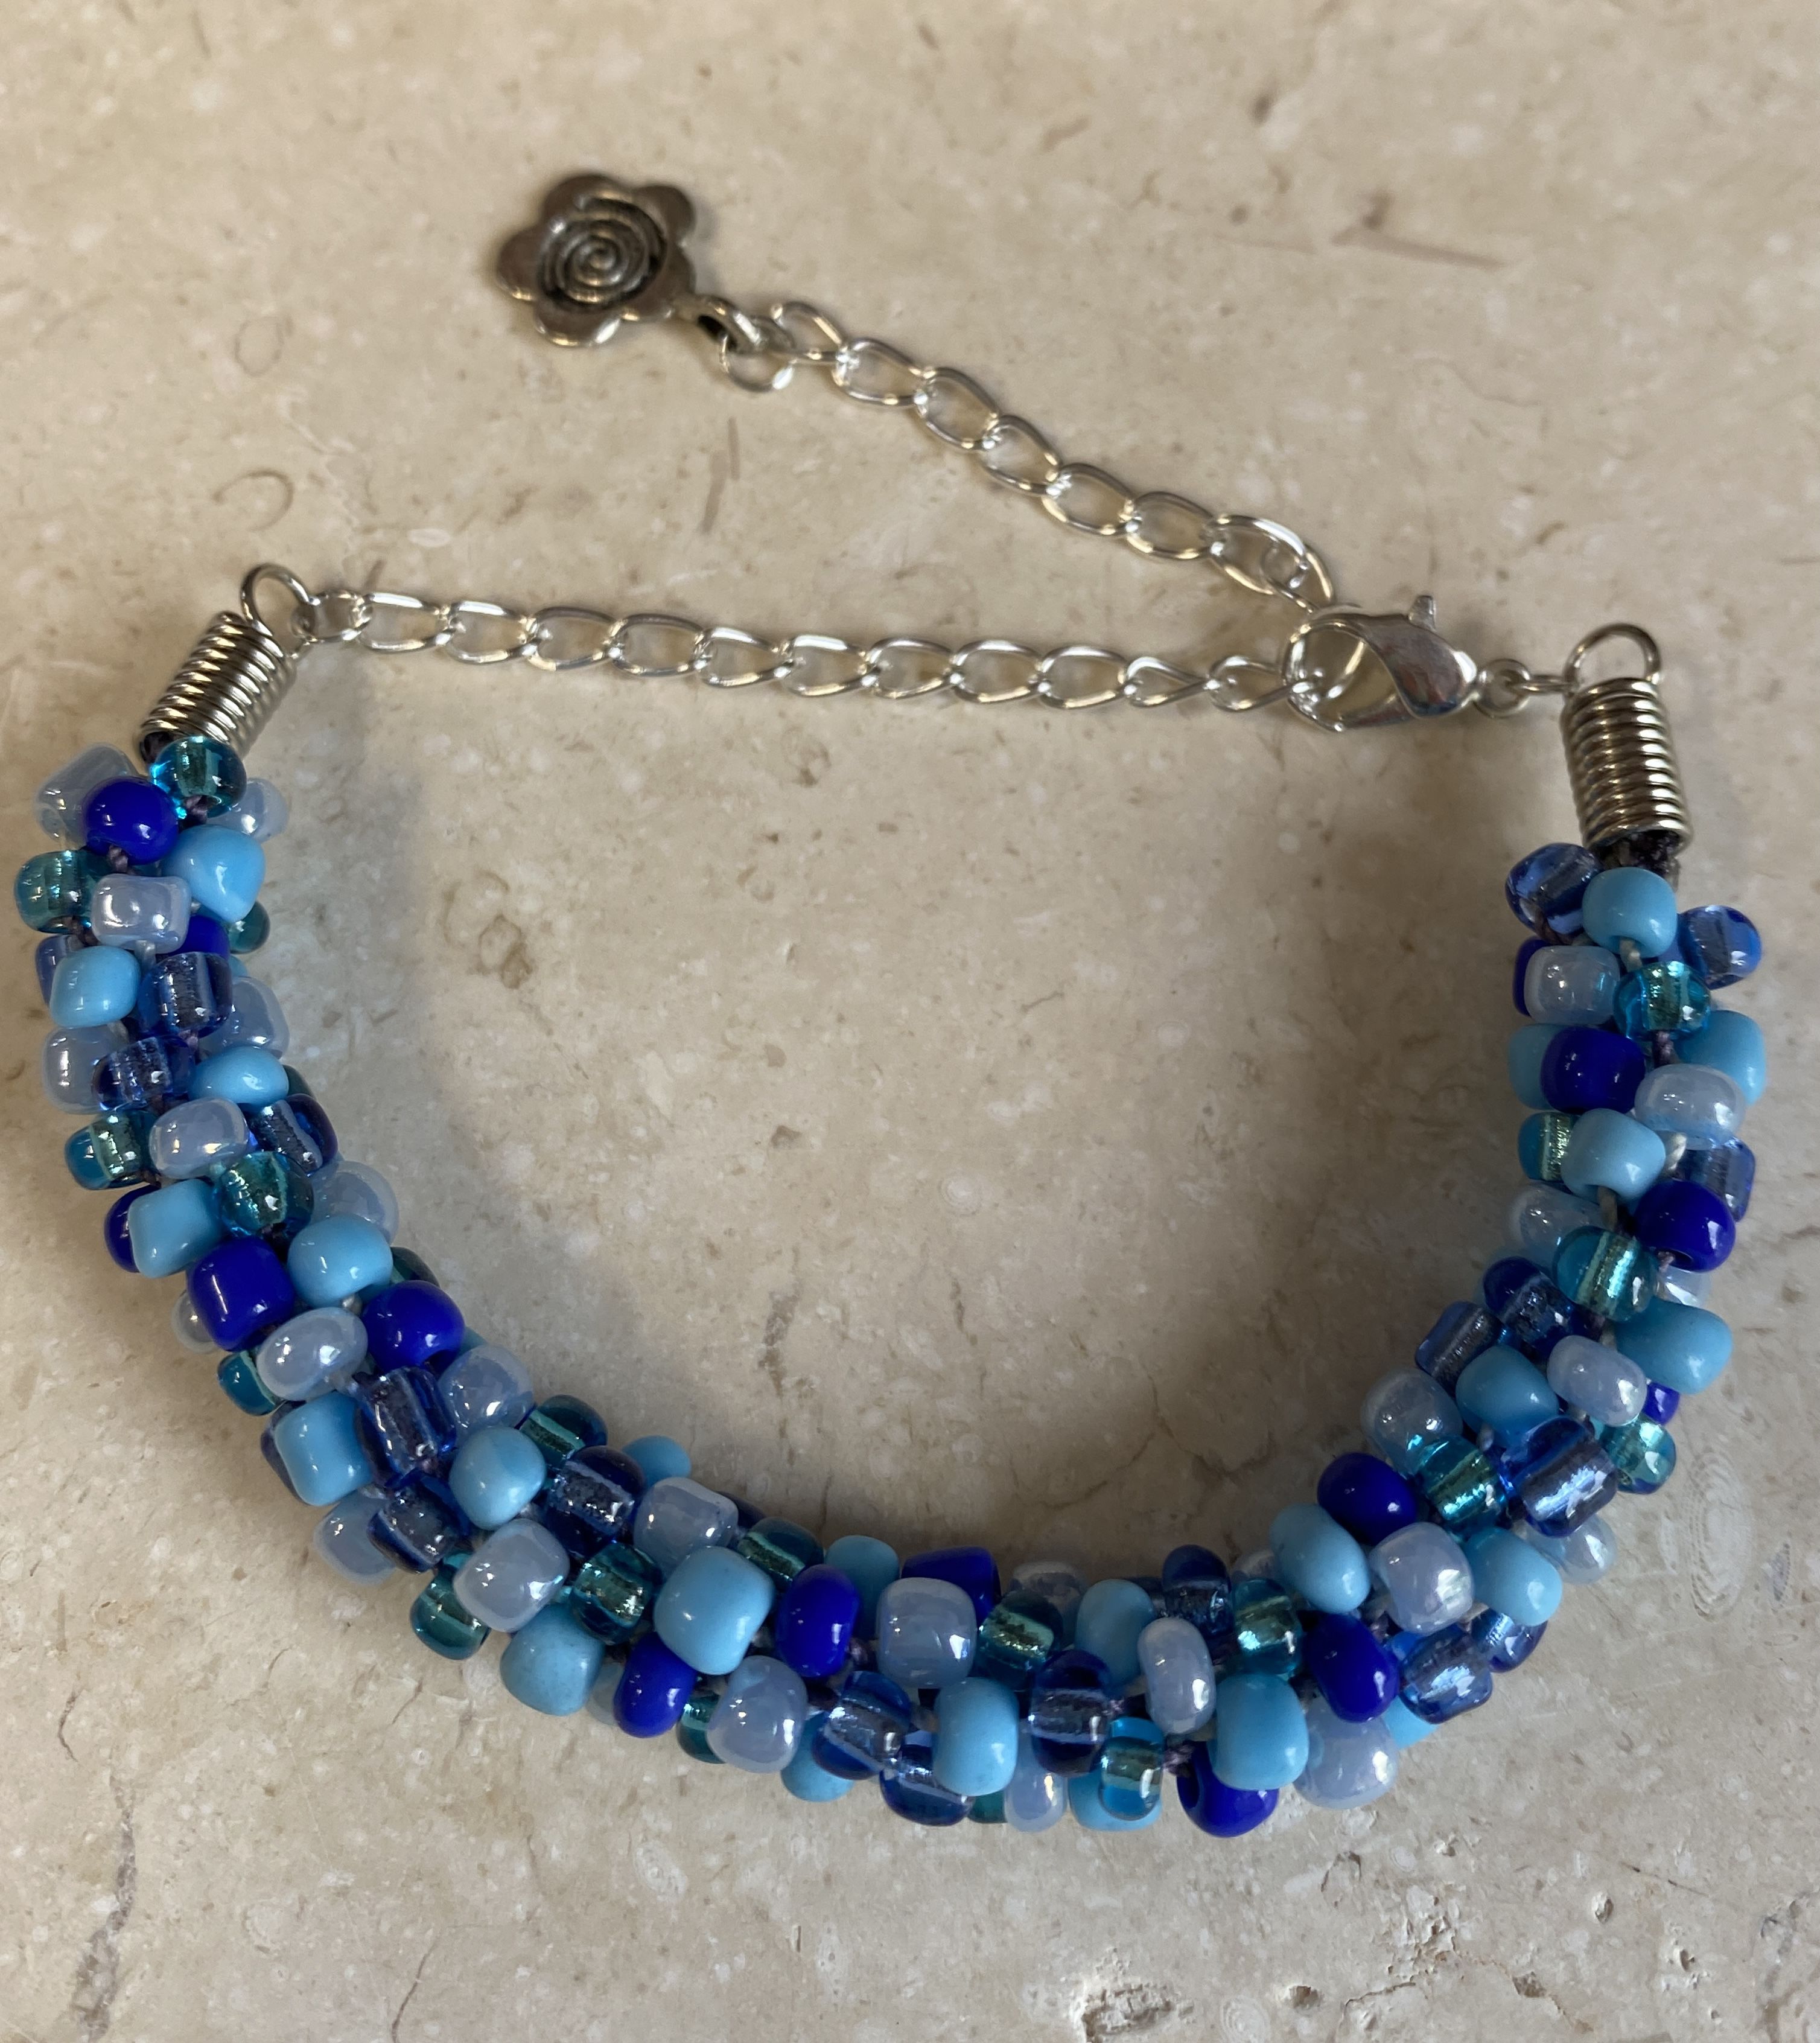 Kumihimo Woven and Beaded Bracelet - Mixed Blue Seed Beads - Handmade Japanese Wristband/Bracelet